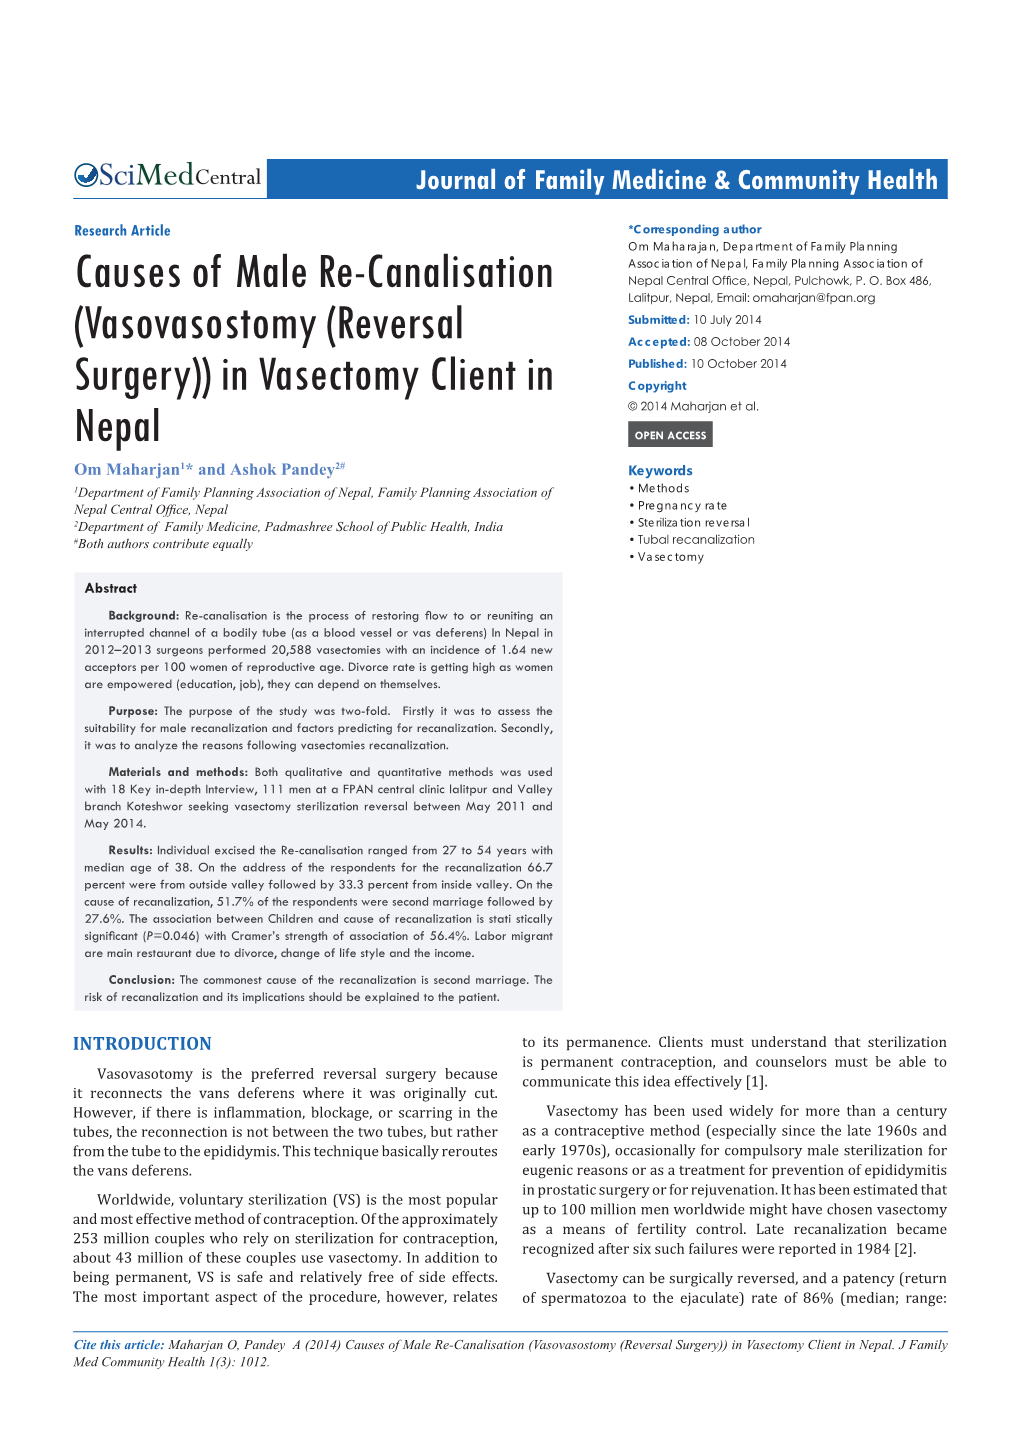 (Vasovasostomy (Reversal Surgery)) in Vasectomy Client in Nepal